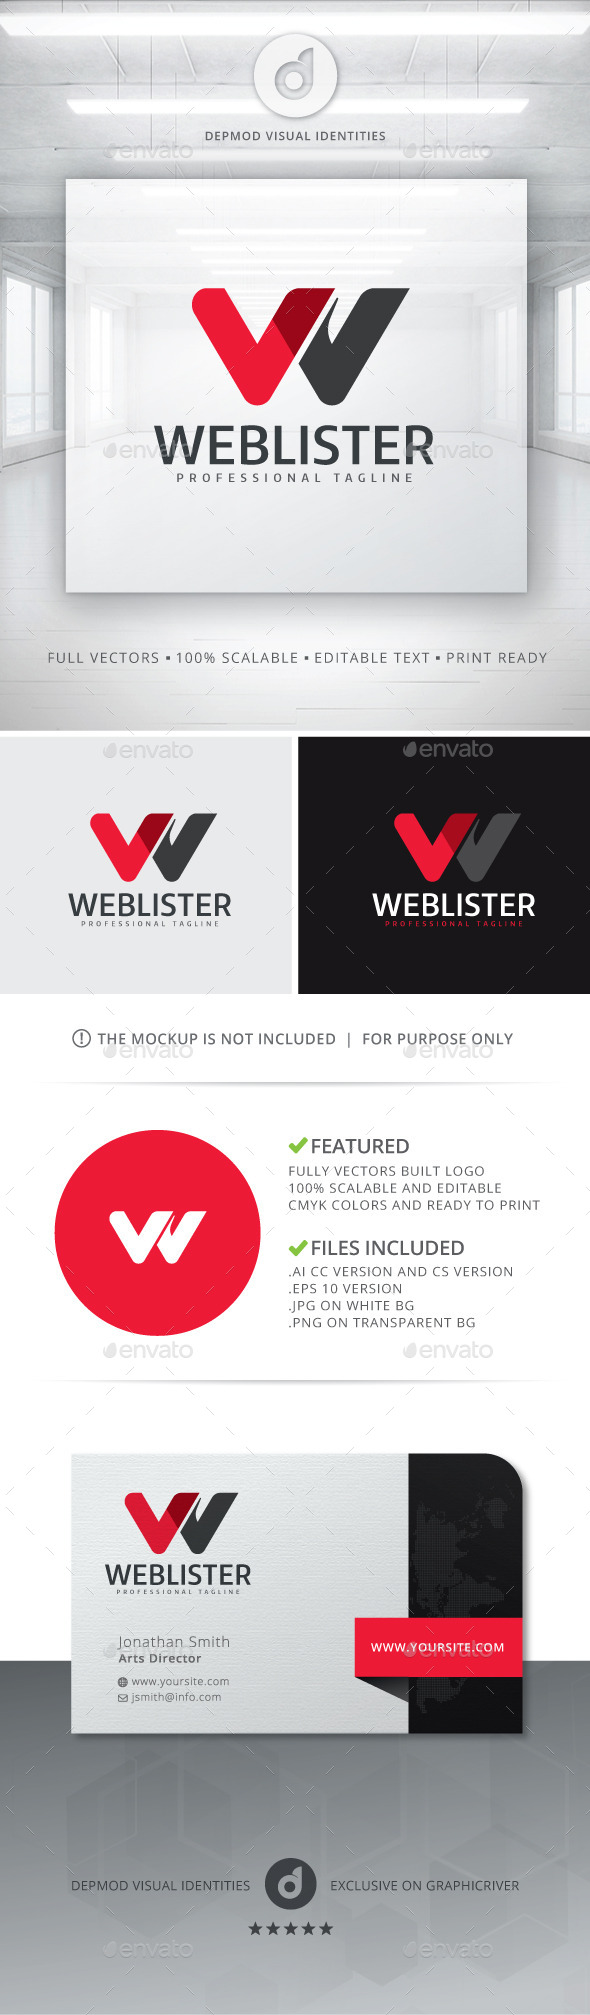 Web Lister Logo